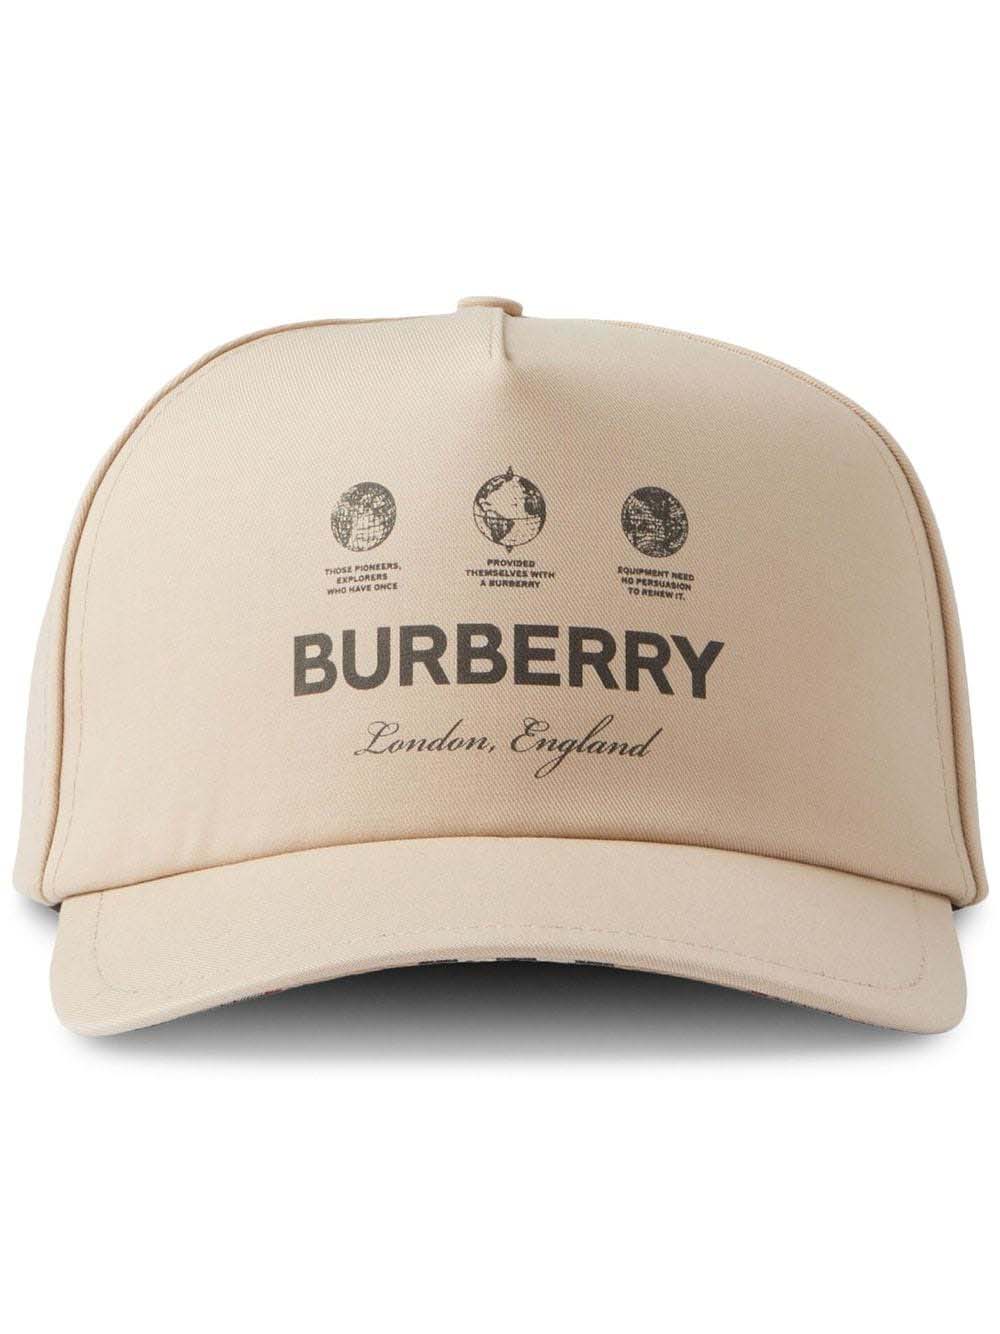 Burberry Logo Print Baseball Cap Sand Beige